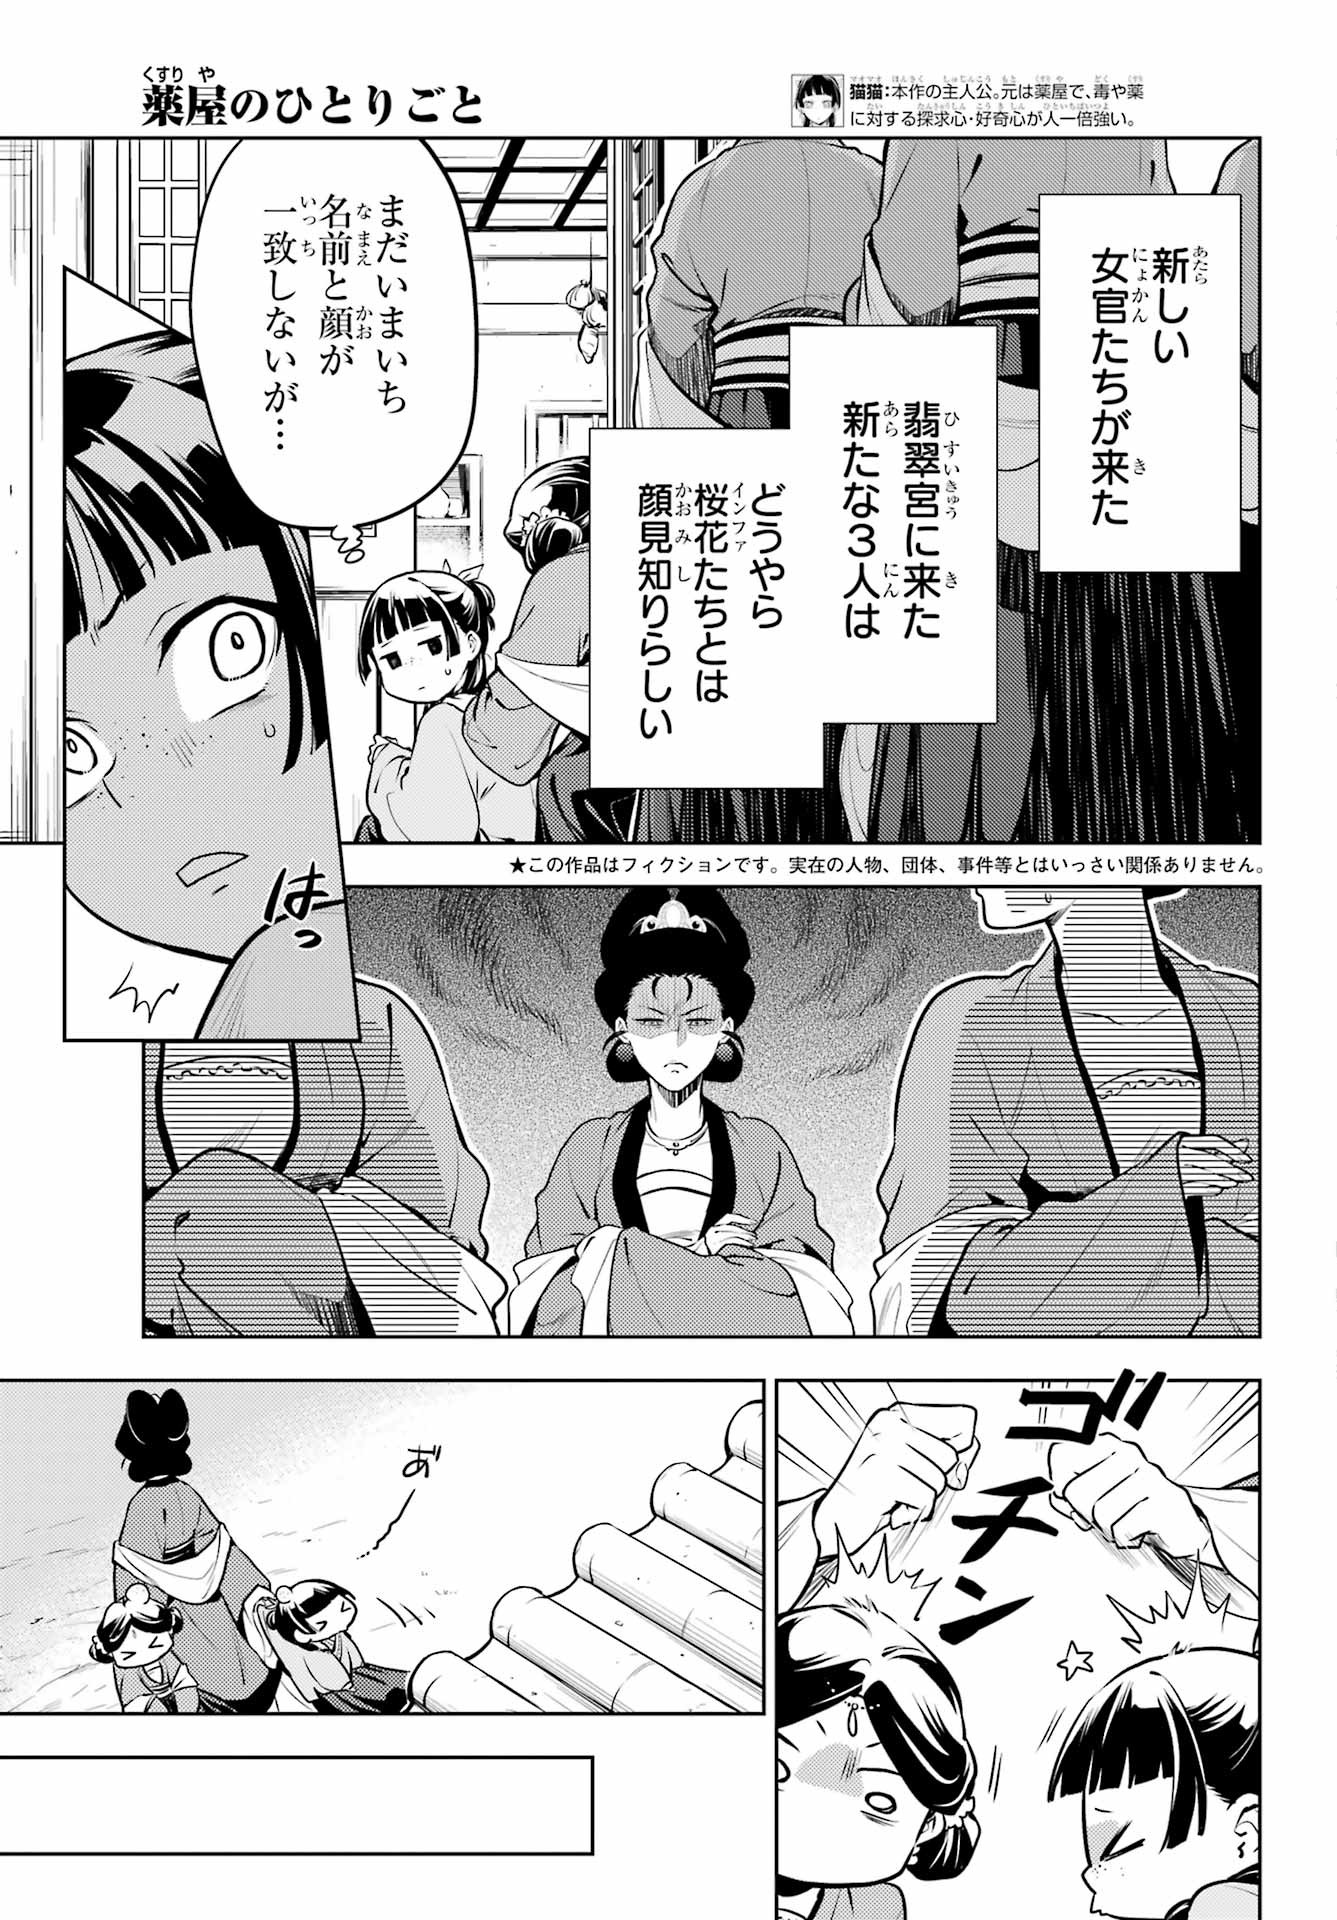 Kusuriya no Hitorigoto - Chapter 59-1 - Page 3